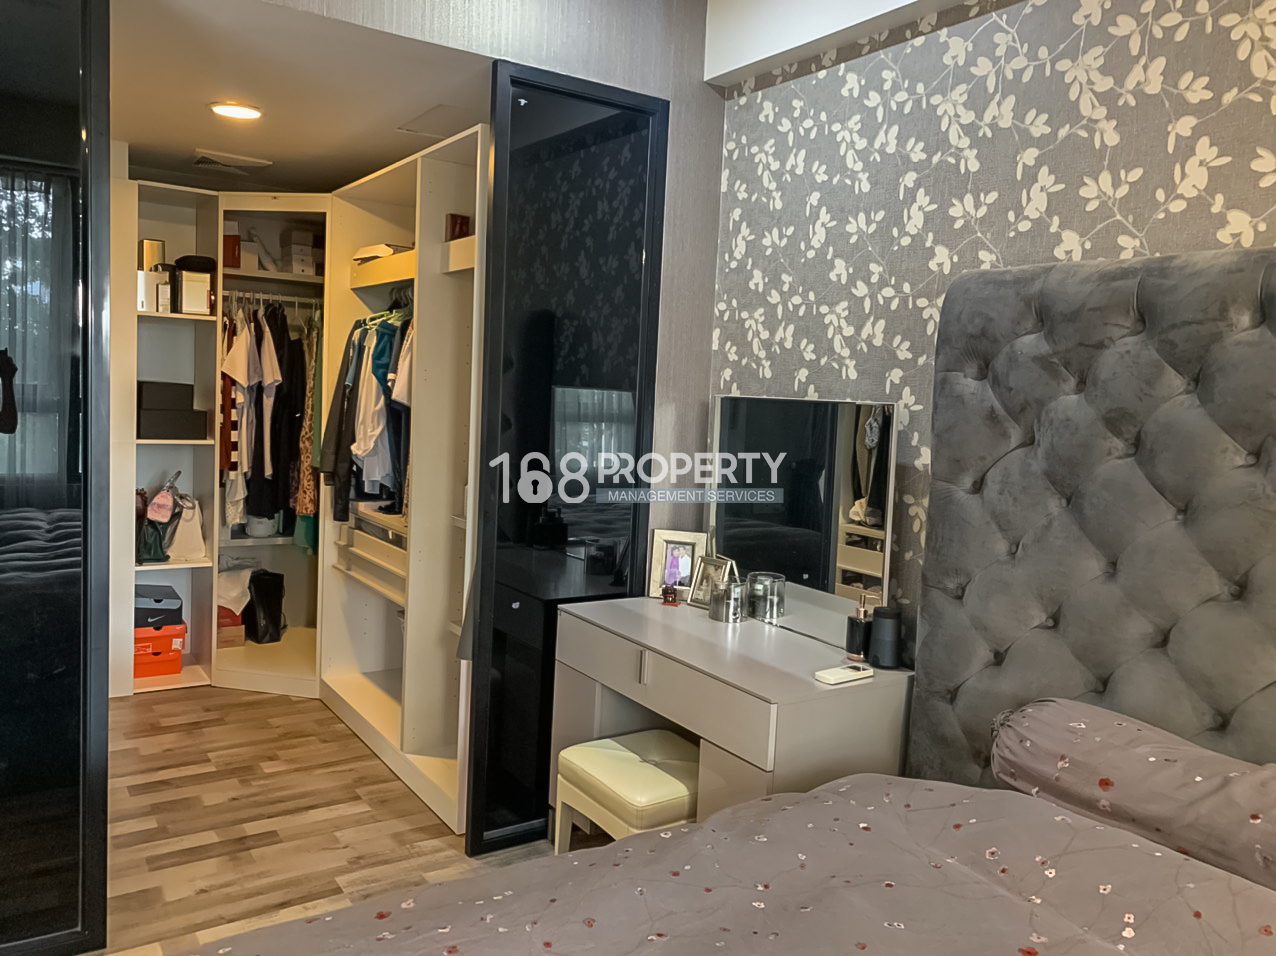 Masteri Thao Dien apartment for rent in thao dien